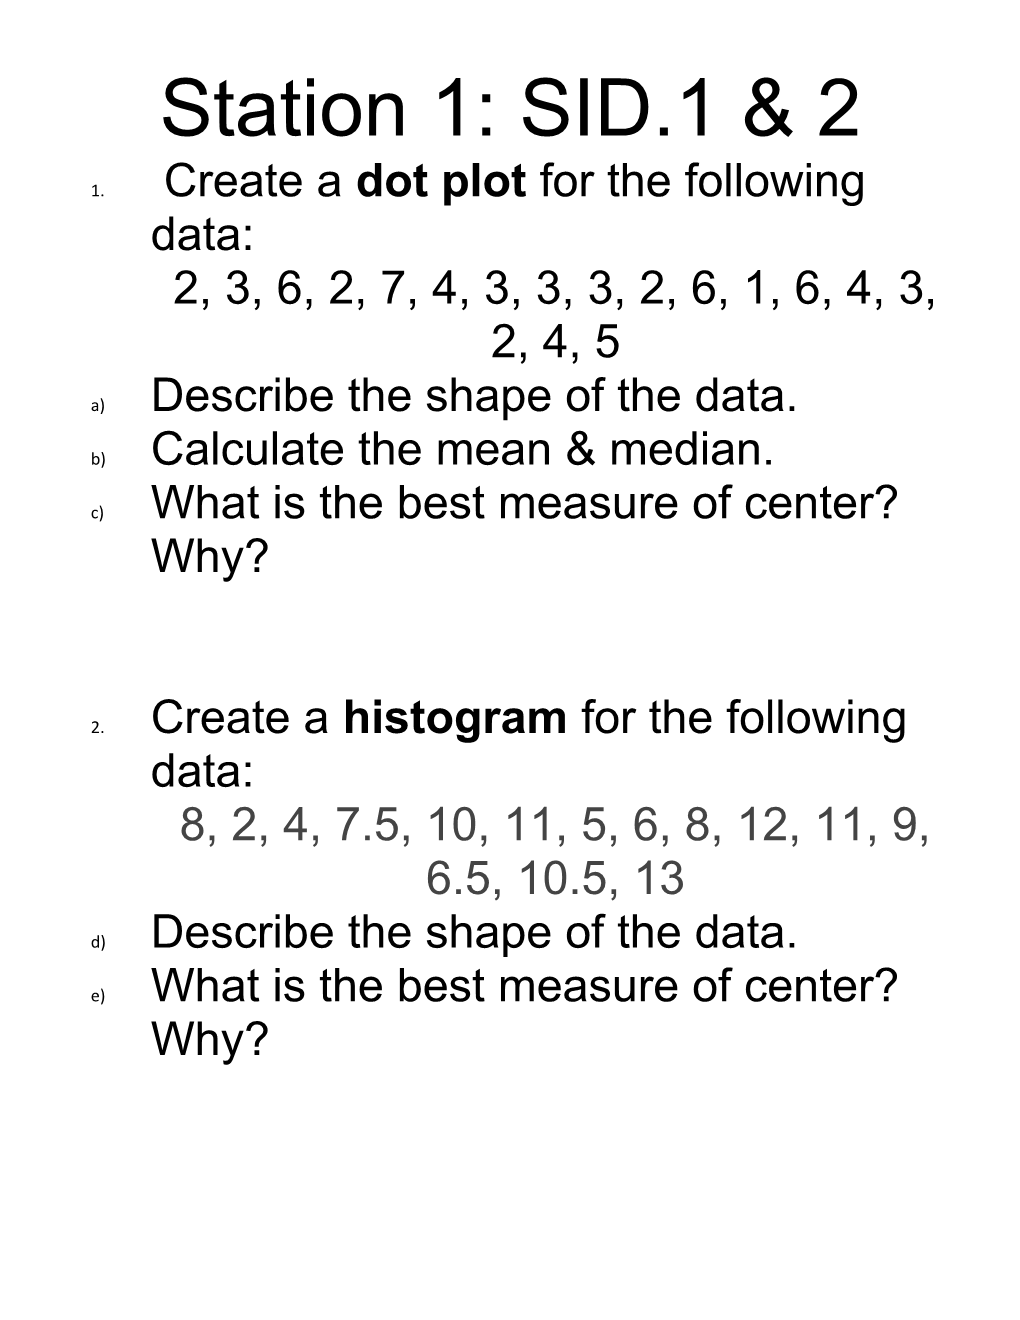 A)Describe the Shape of the Data